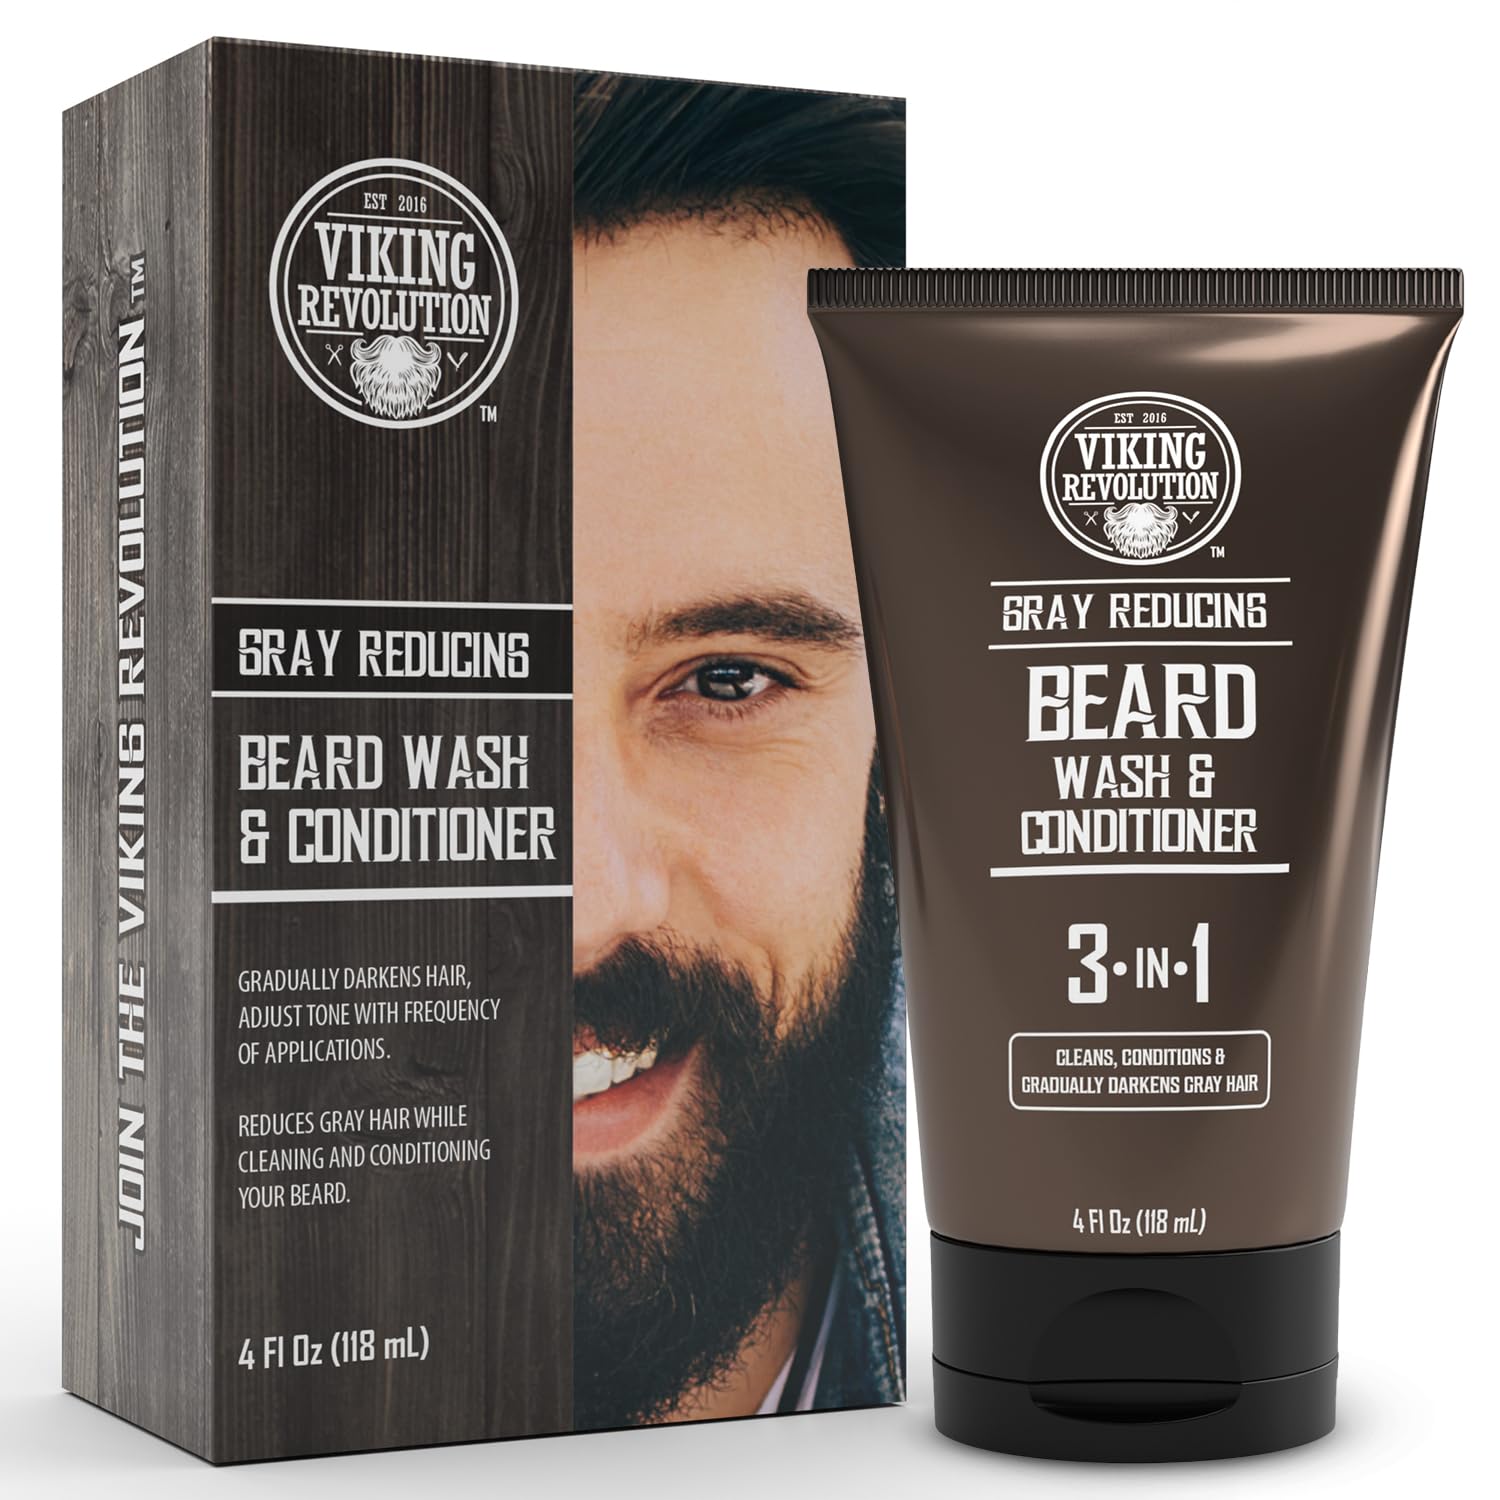 Viking Revolution Mens Beard Dye for Men Dark Brown - Grey Reducing Shampoo Beard Coloring for Men - Mens Beard Color Mustache Dye for Men - Grey Reducing Beard Wash and Conditioner (4 , Dark Brown)